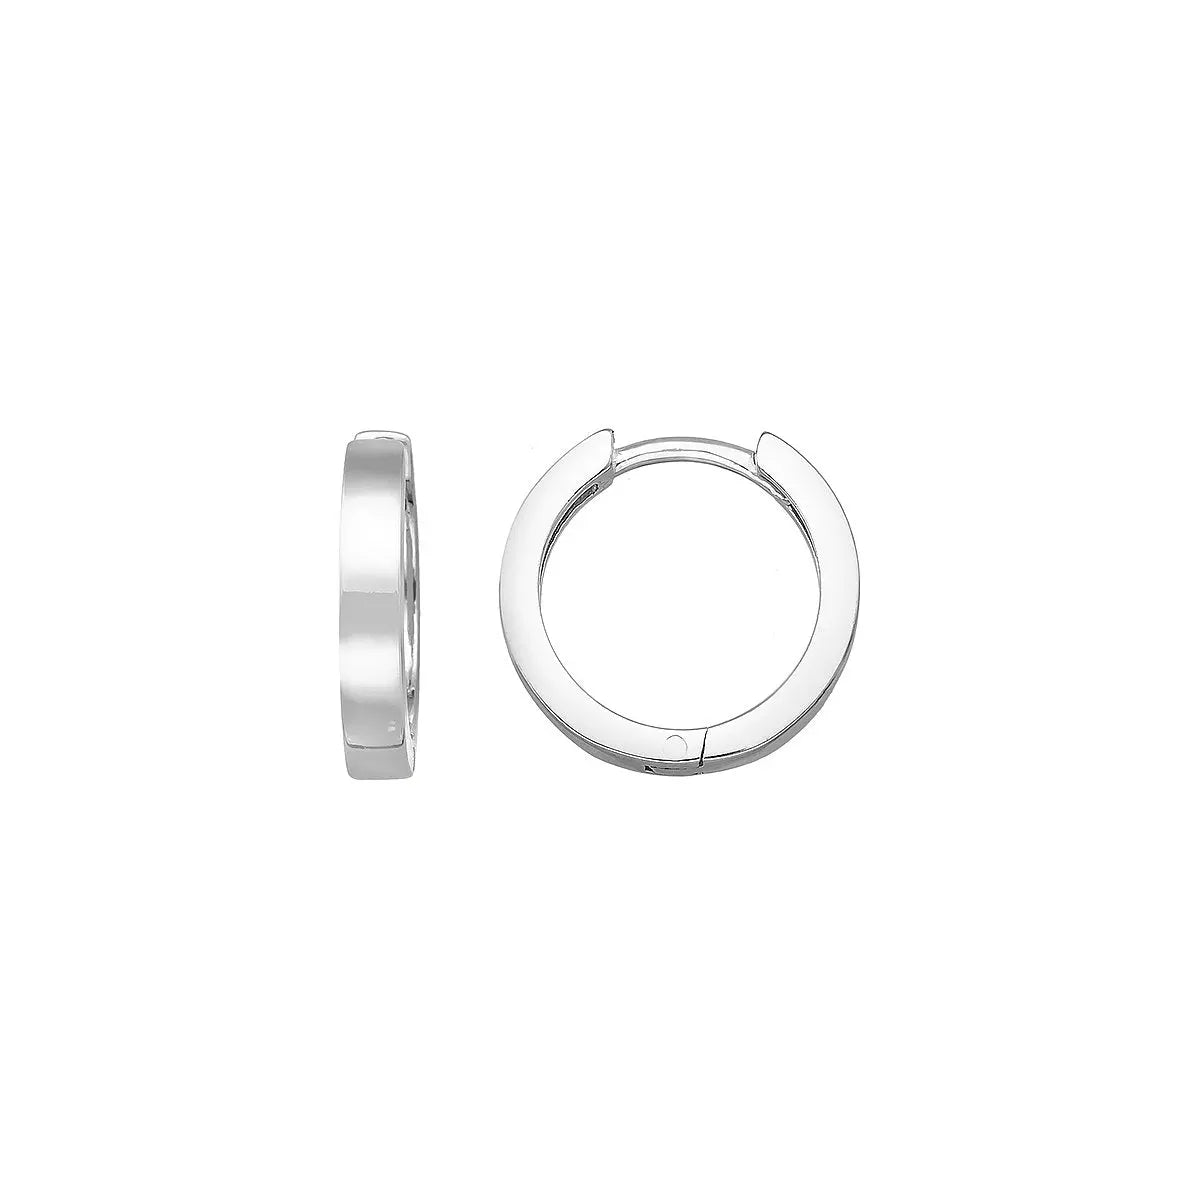 Simple creoler 13mm - Sølv fra Lush Lush Jewelry